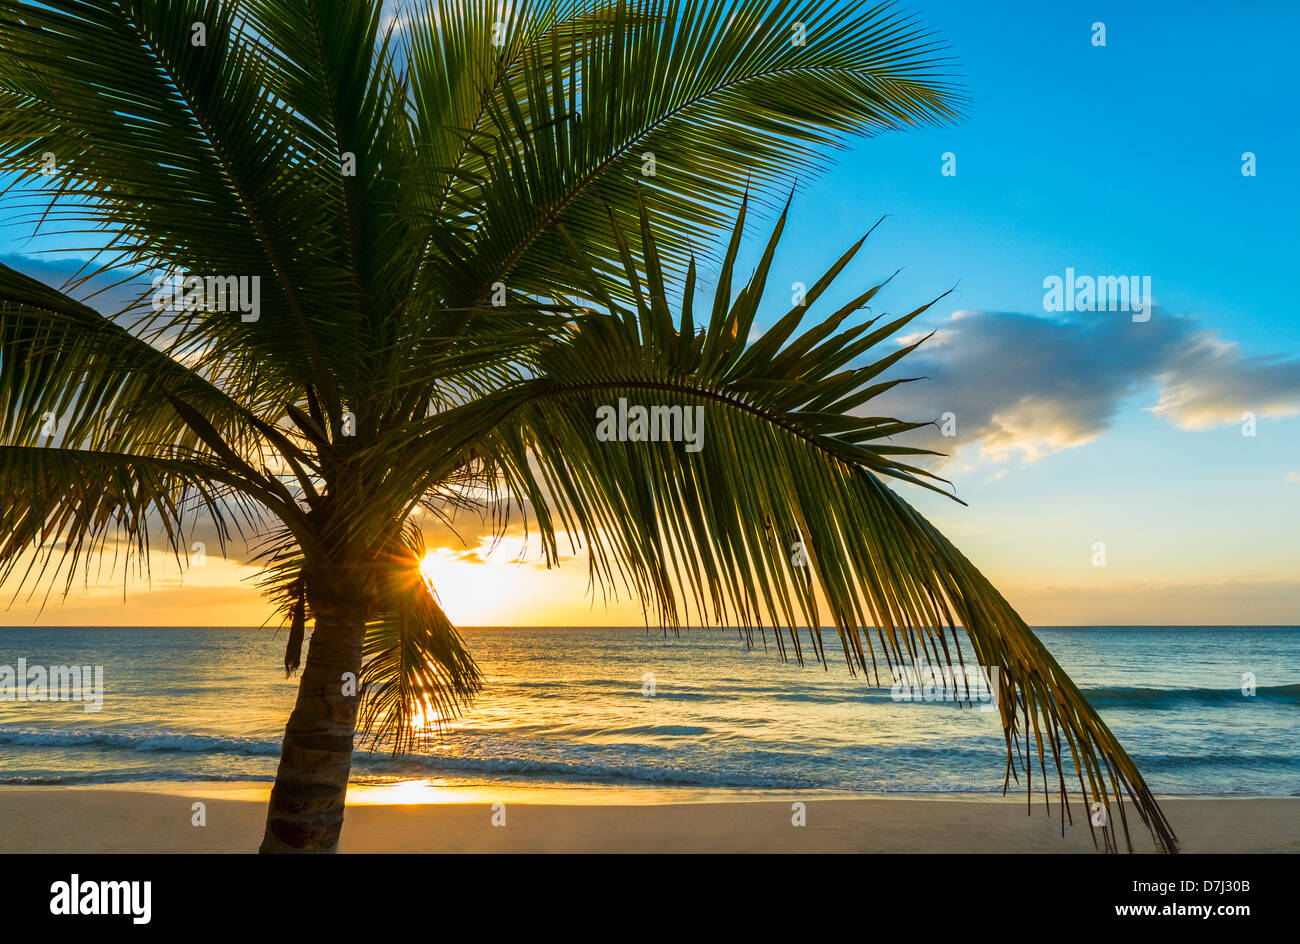 Jamaica, Palm tree on beach at sunset Stock Photo